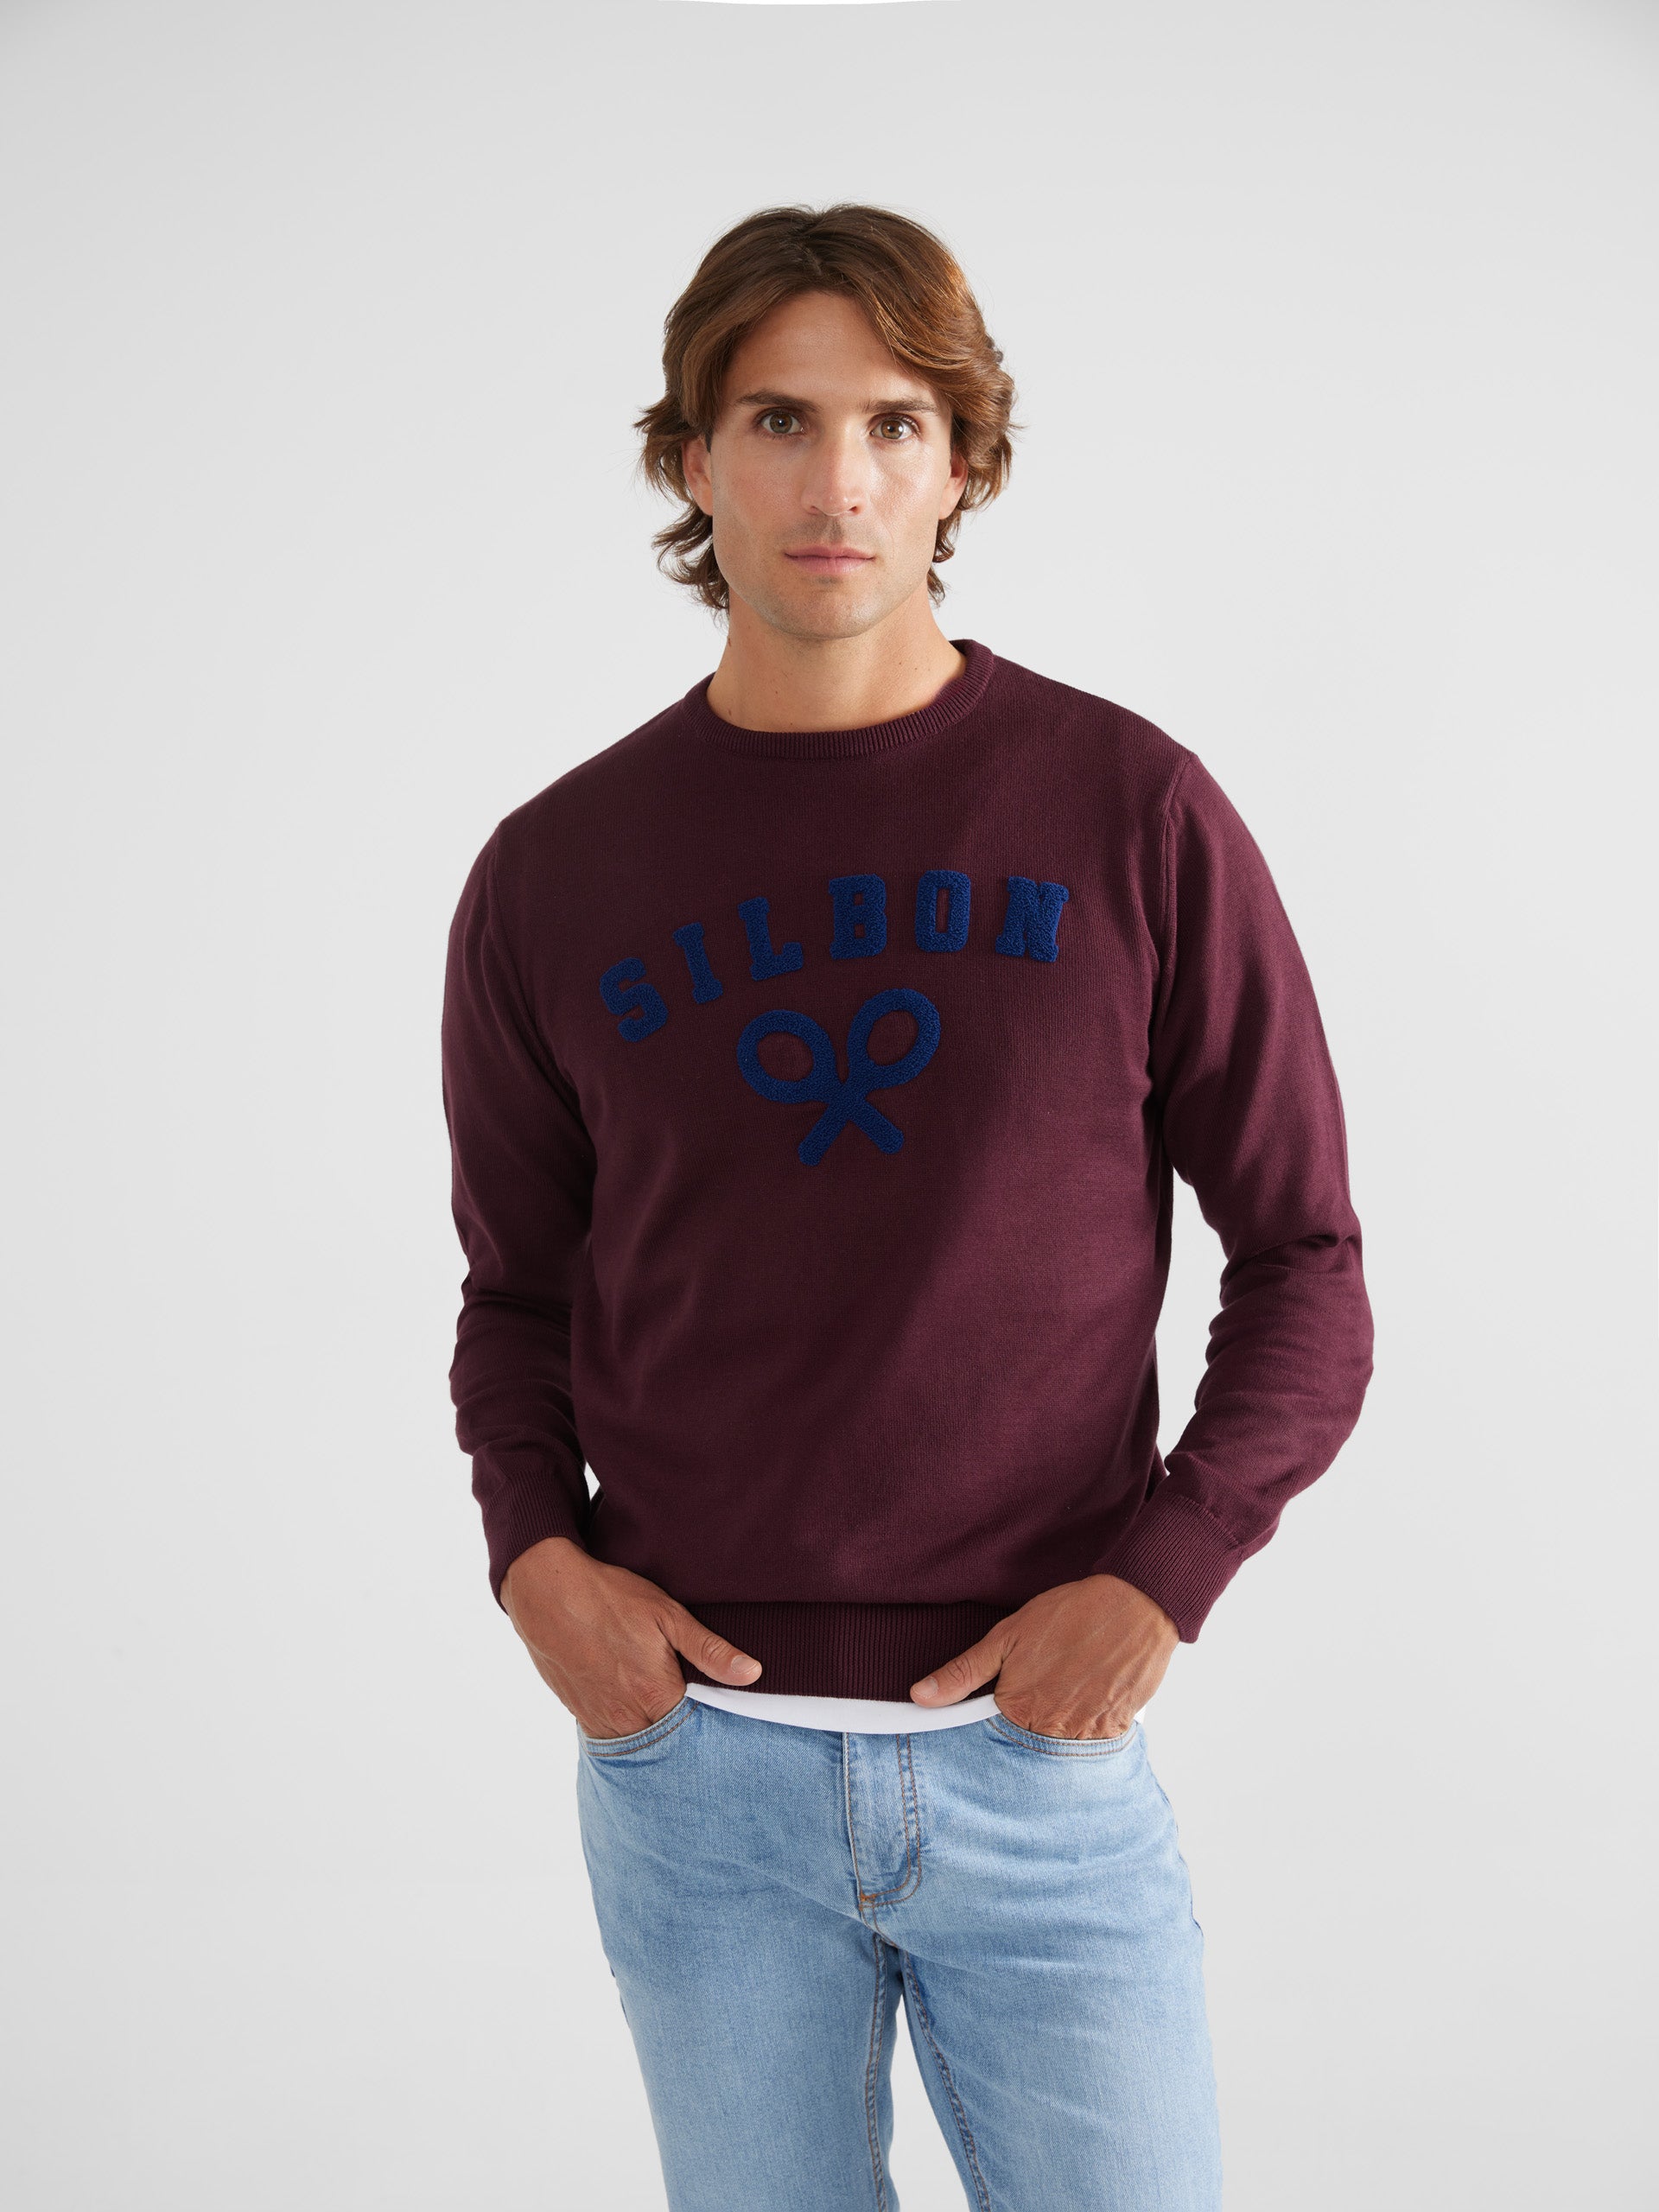 Burgundy logo crew neck sweater